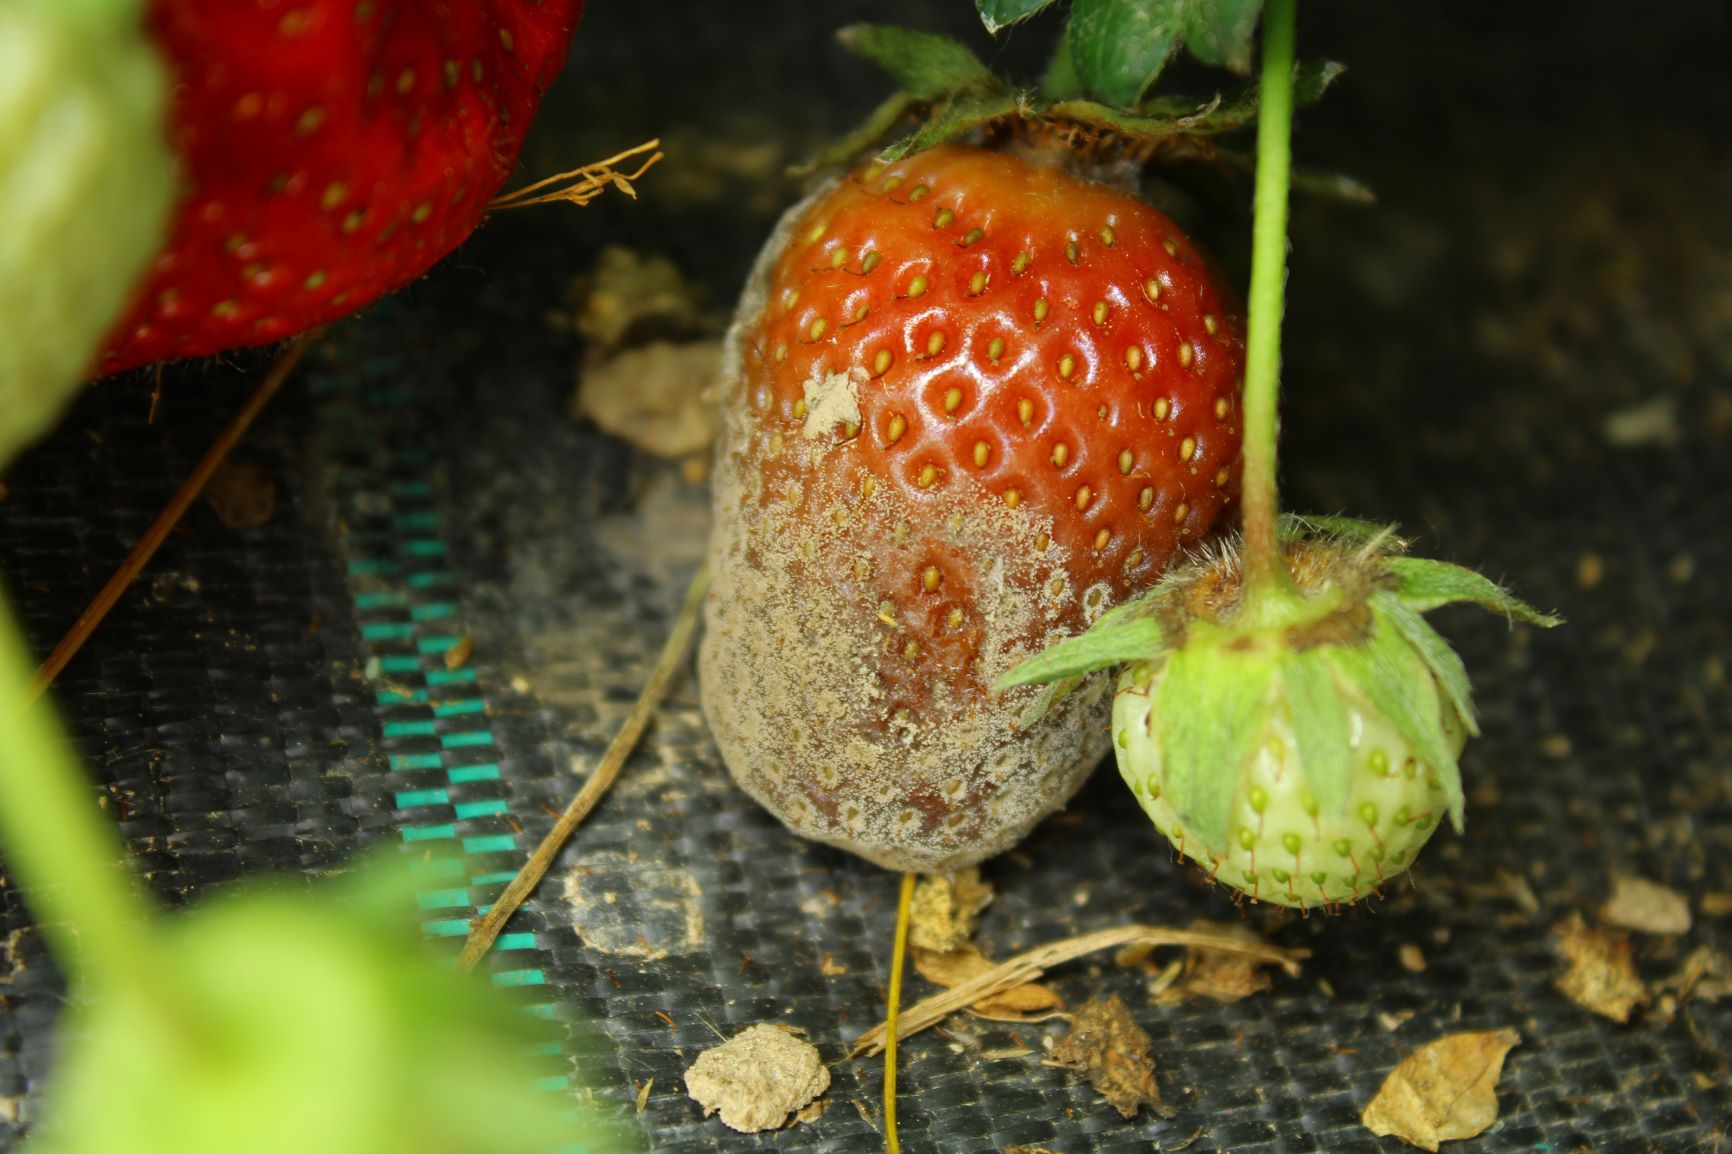 Botrytis cinerea on strawberry fruits